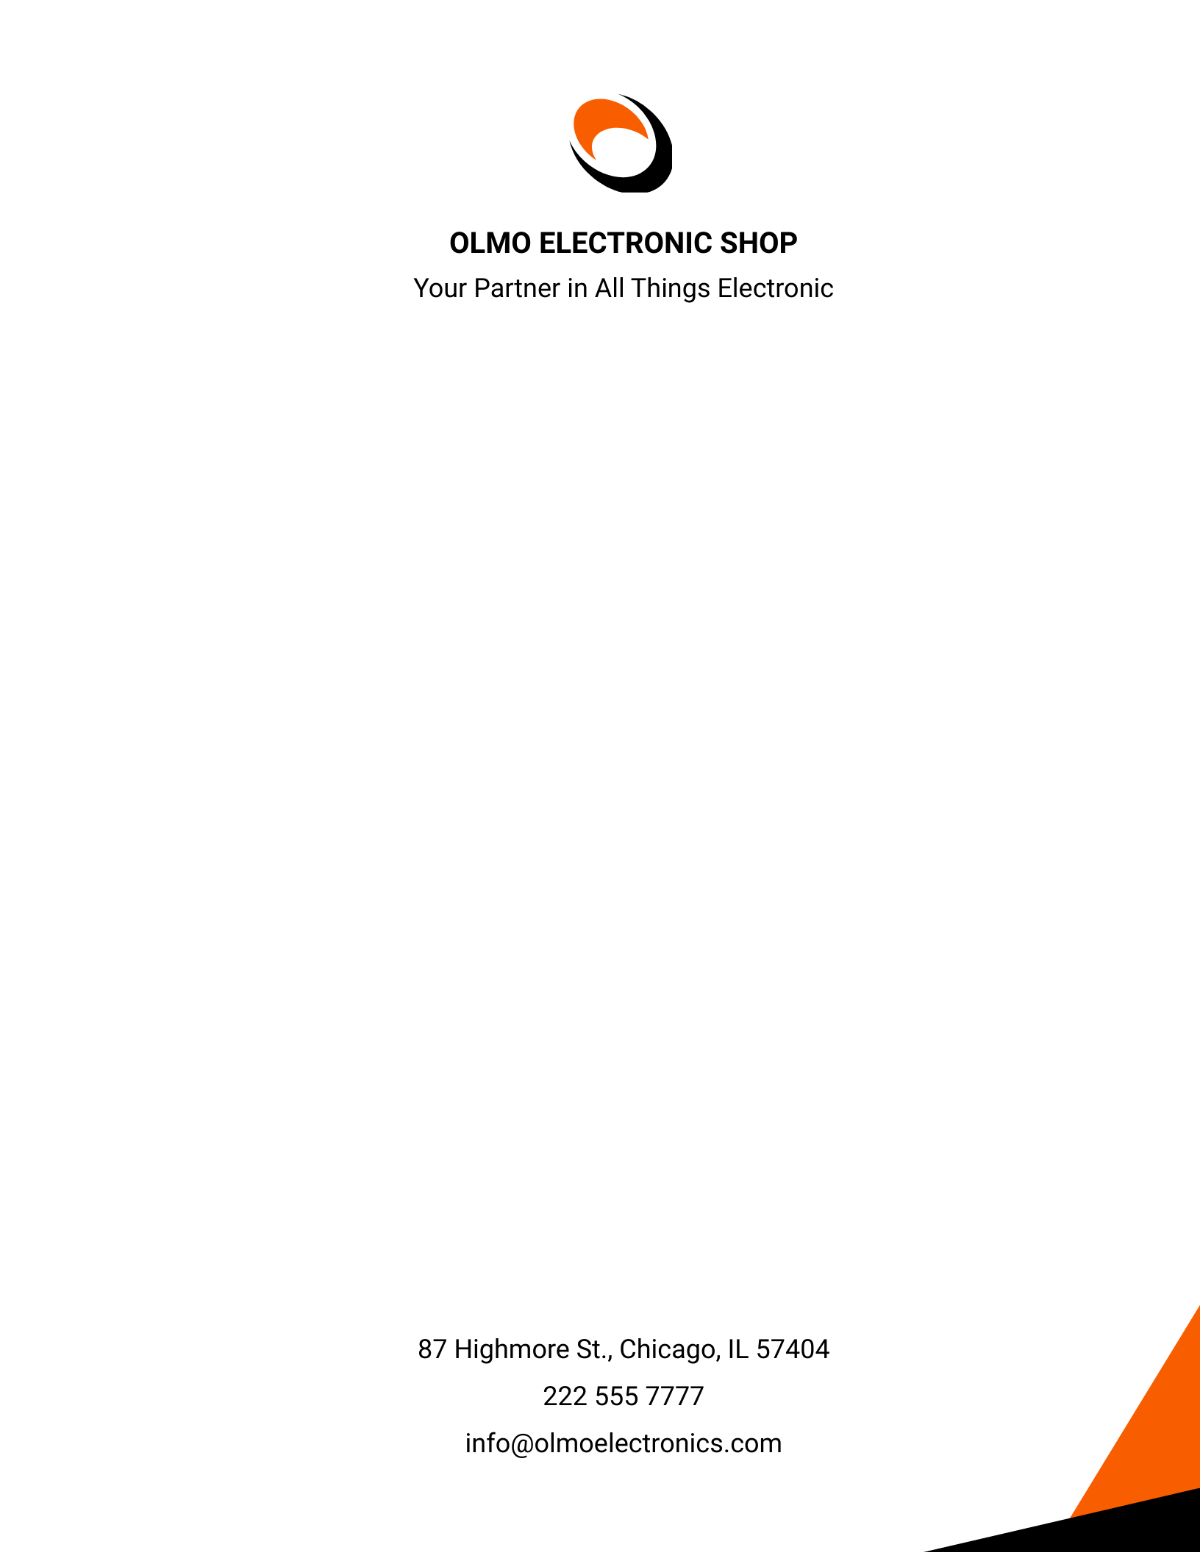 Electronic Shop Letterhead template